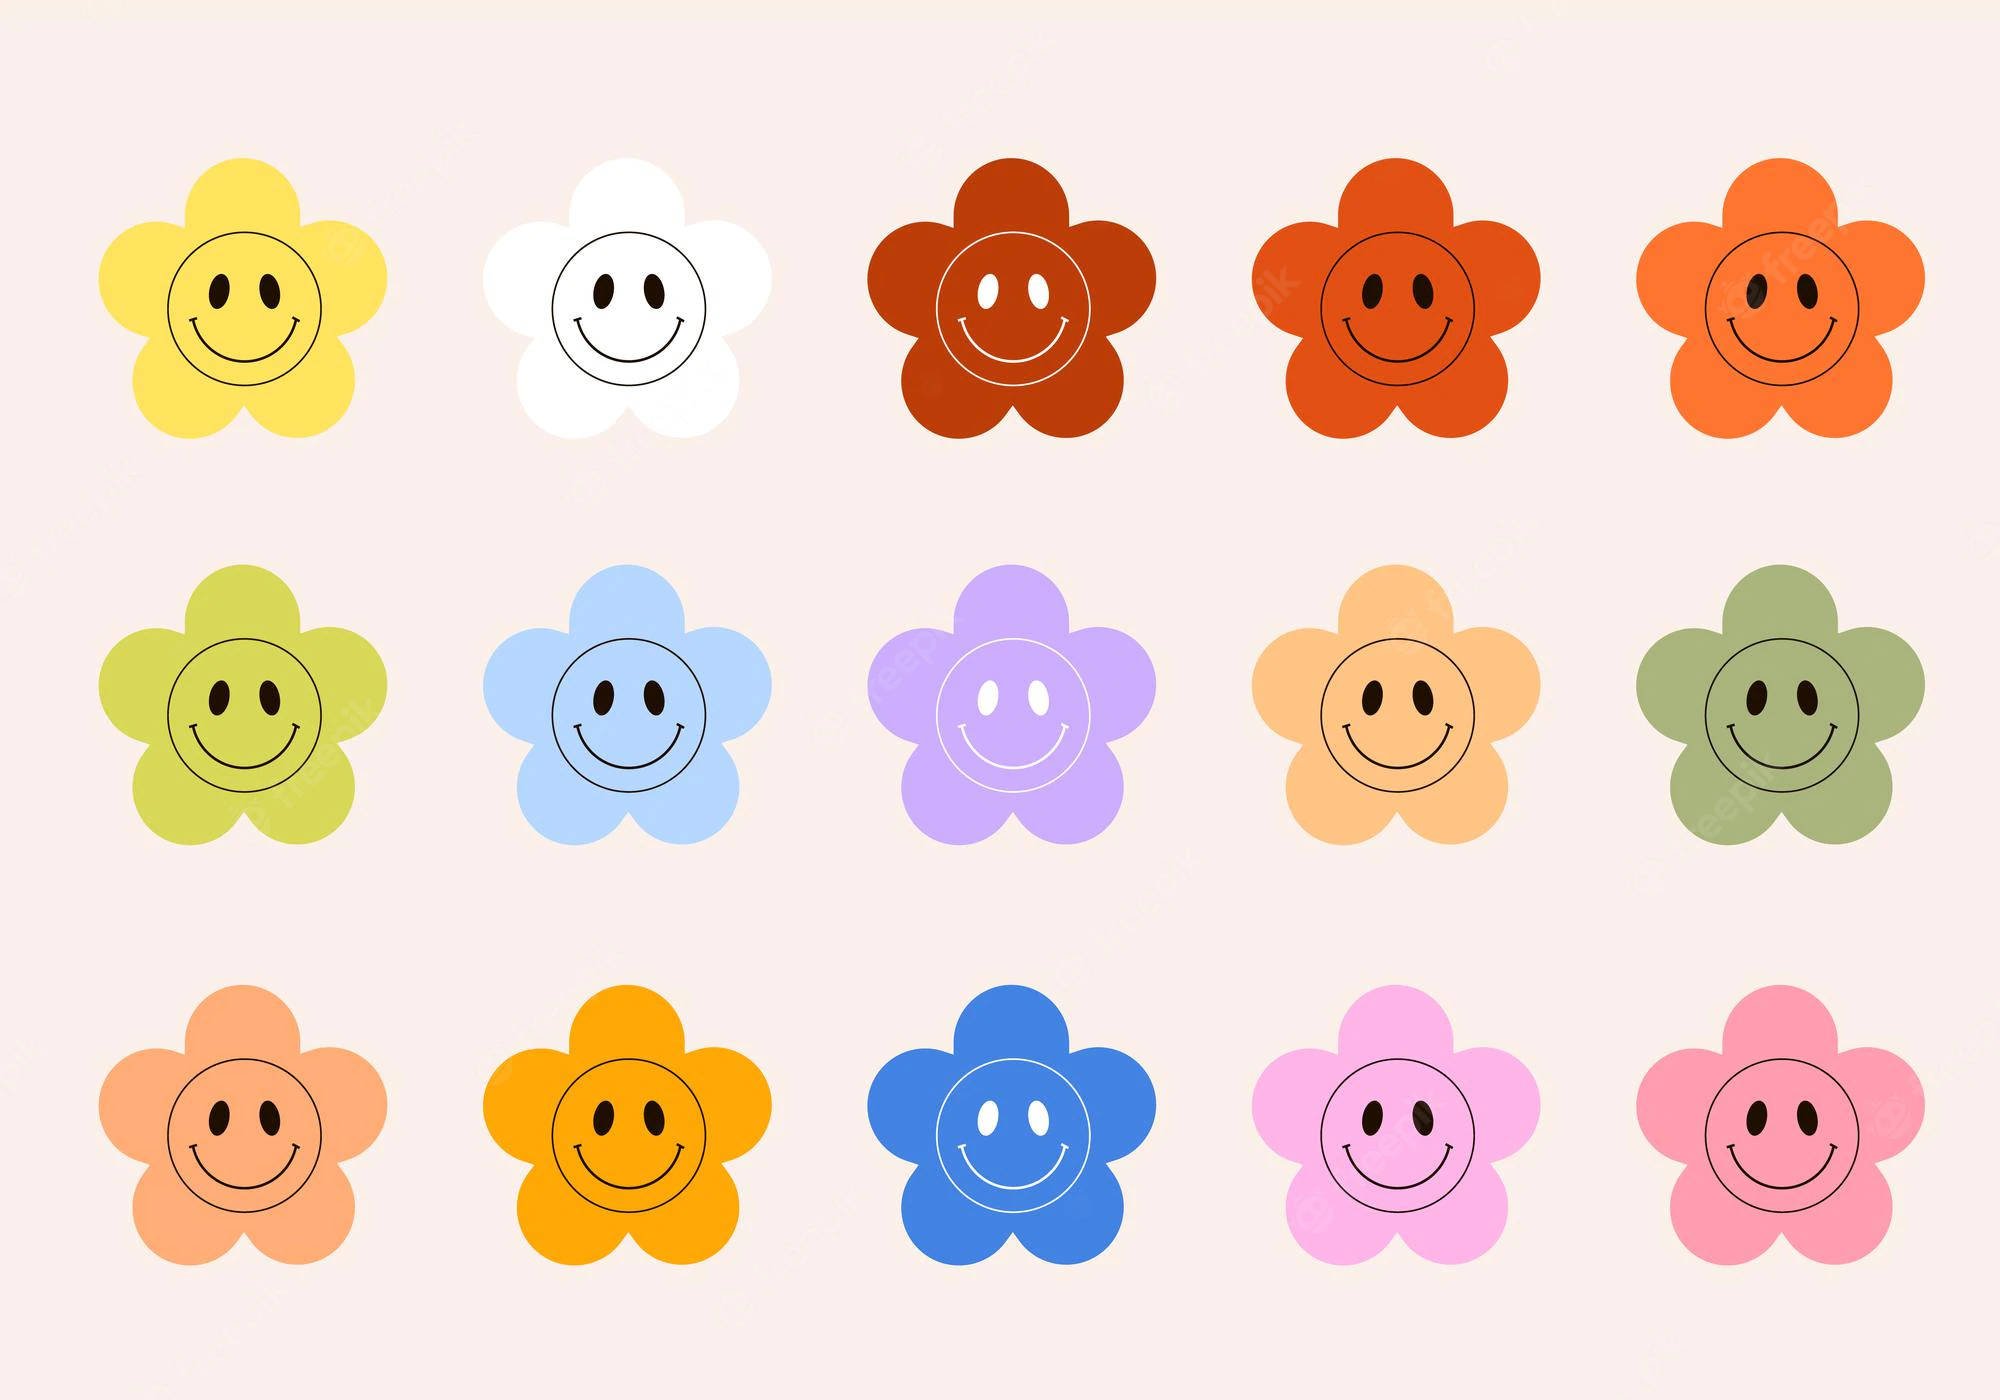 Download Flower Preppy Smiley Faces Wallpaper